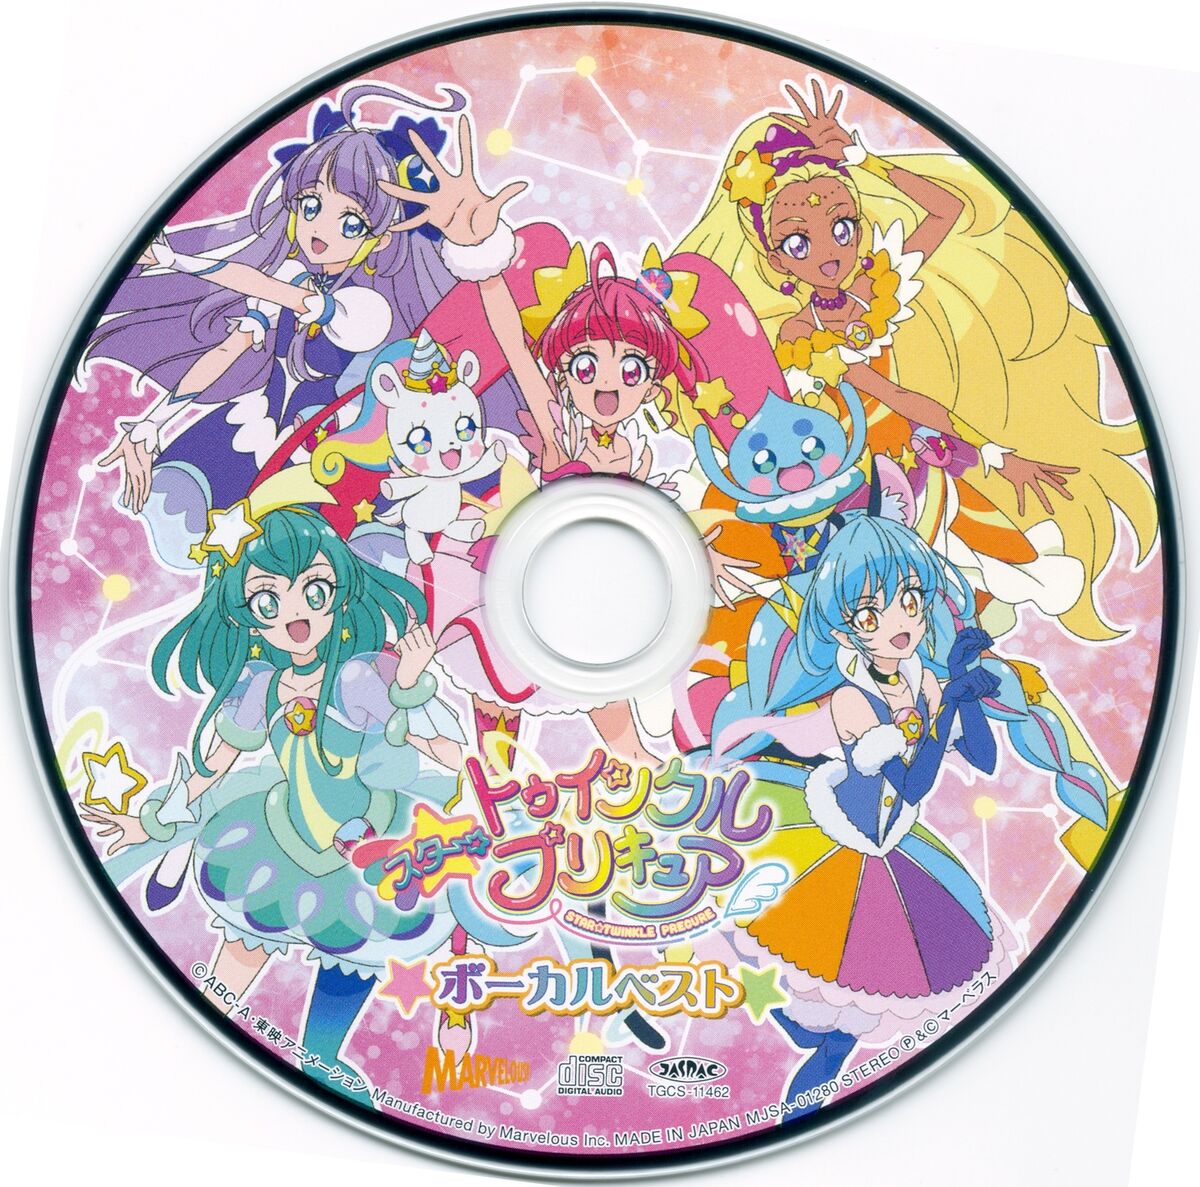 PreCure All Stars F Original Soundtrack JAPAN CD